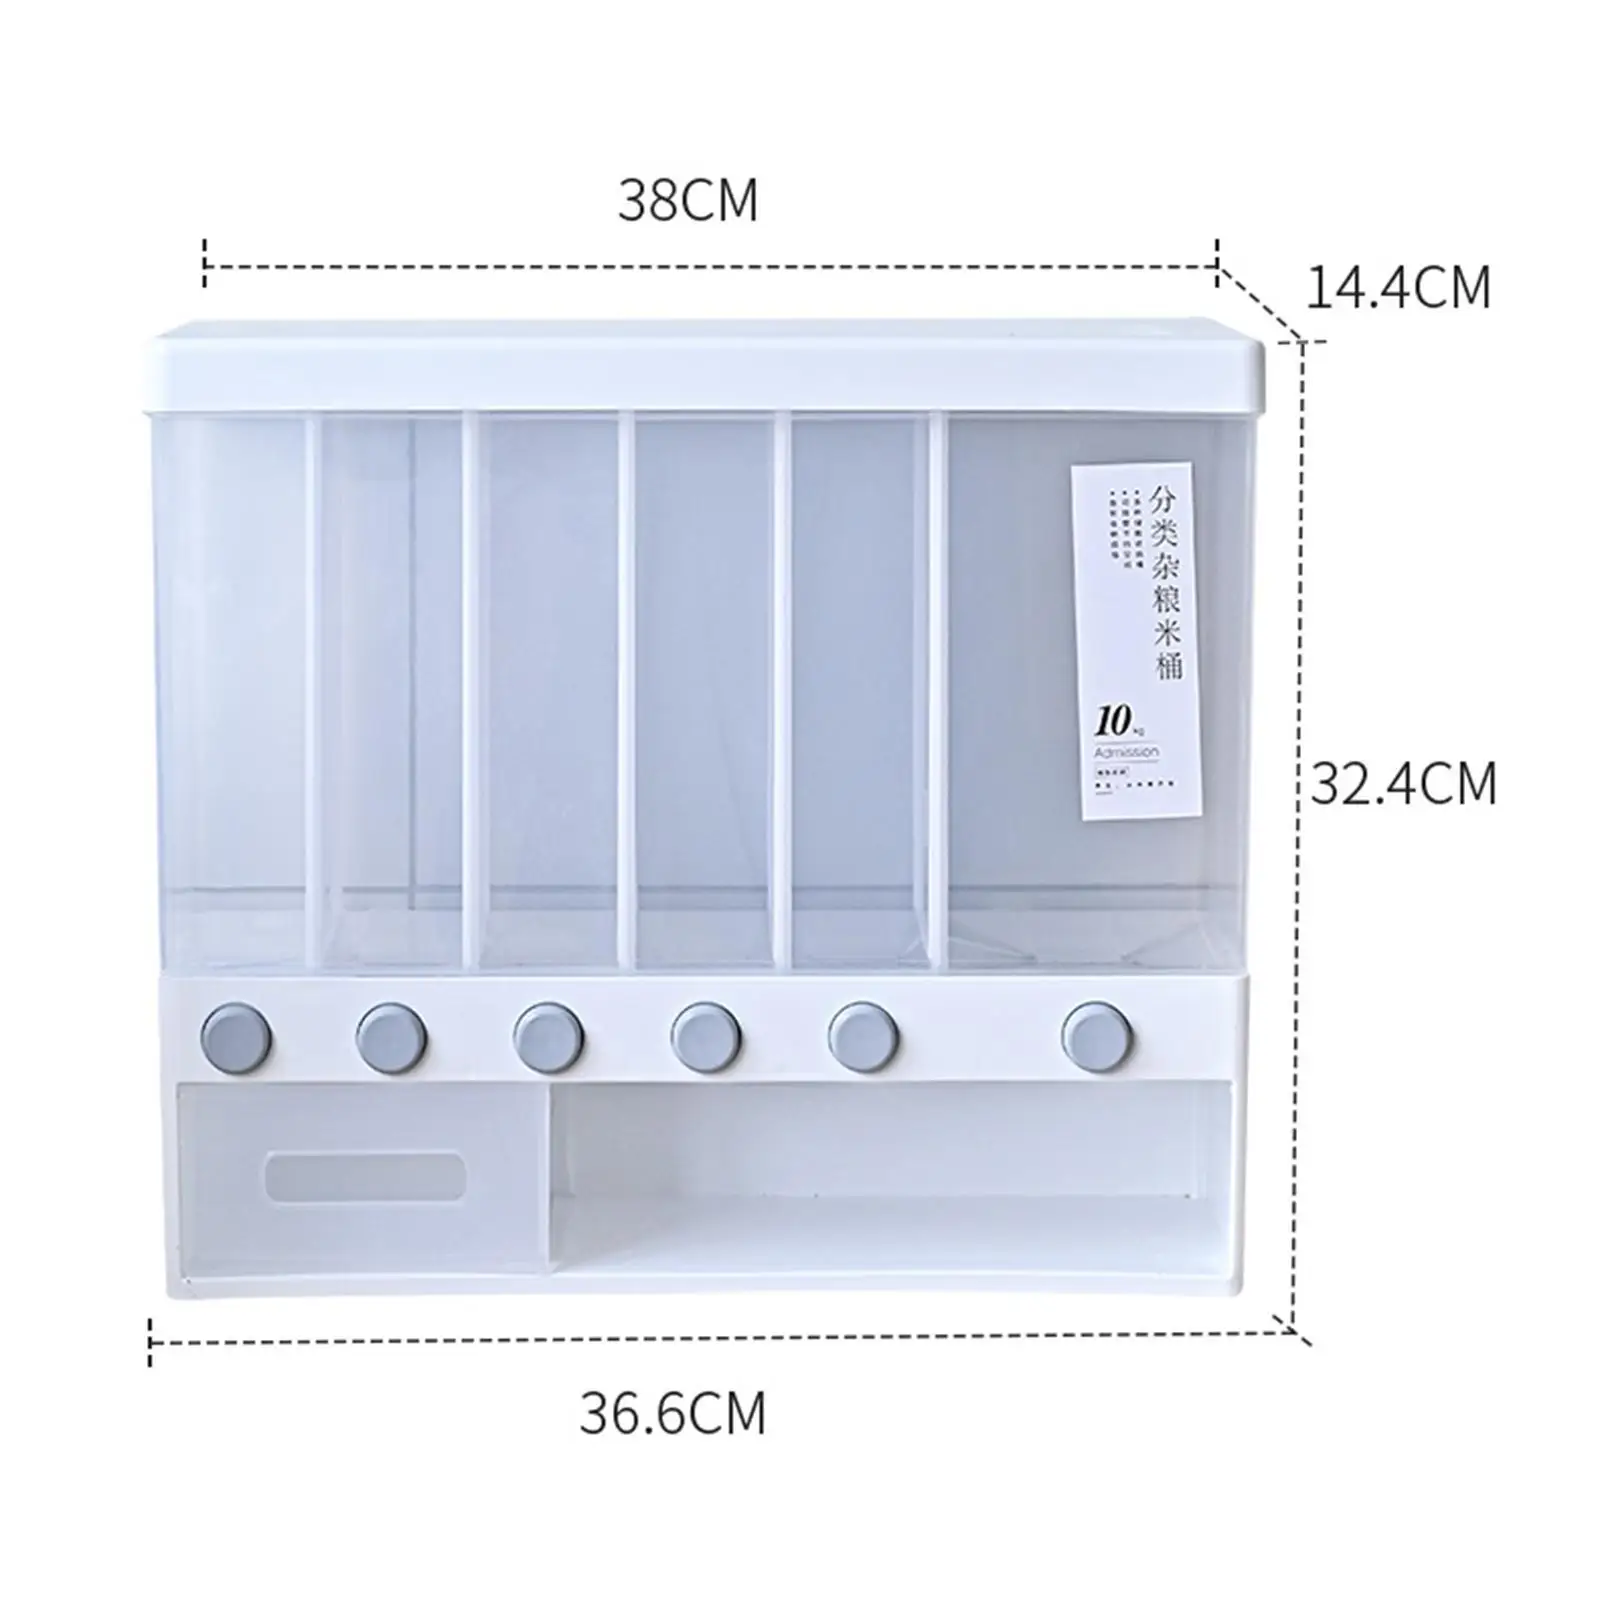 32.4x38x14.4cm Wall Mounted Dry Food Dispenser Rice Dispenser 